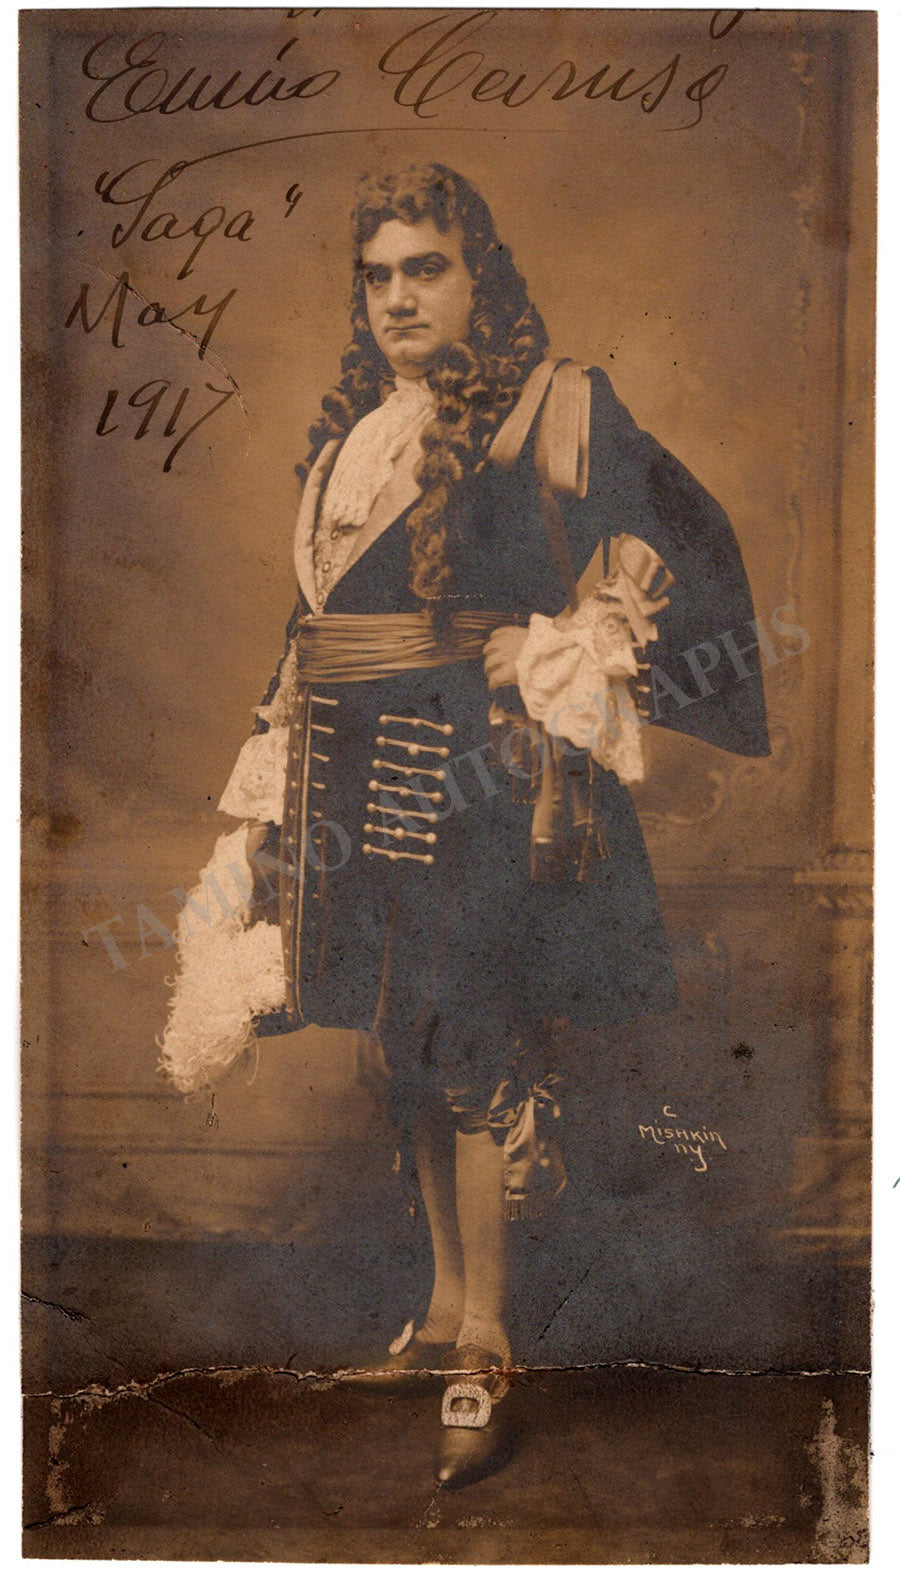 Caruso, Enrico - Signed Photograph as Riccardo 1917